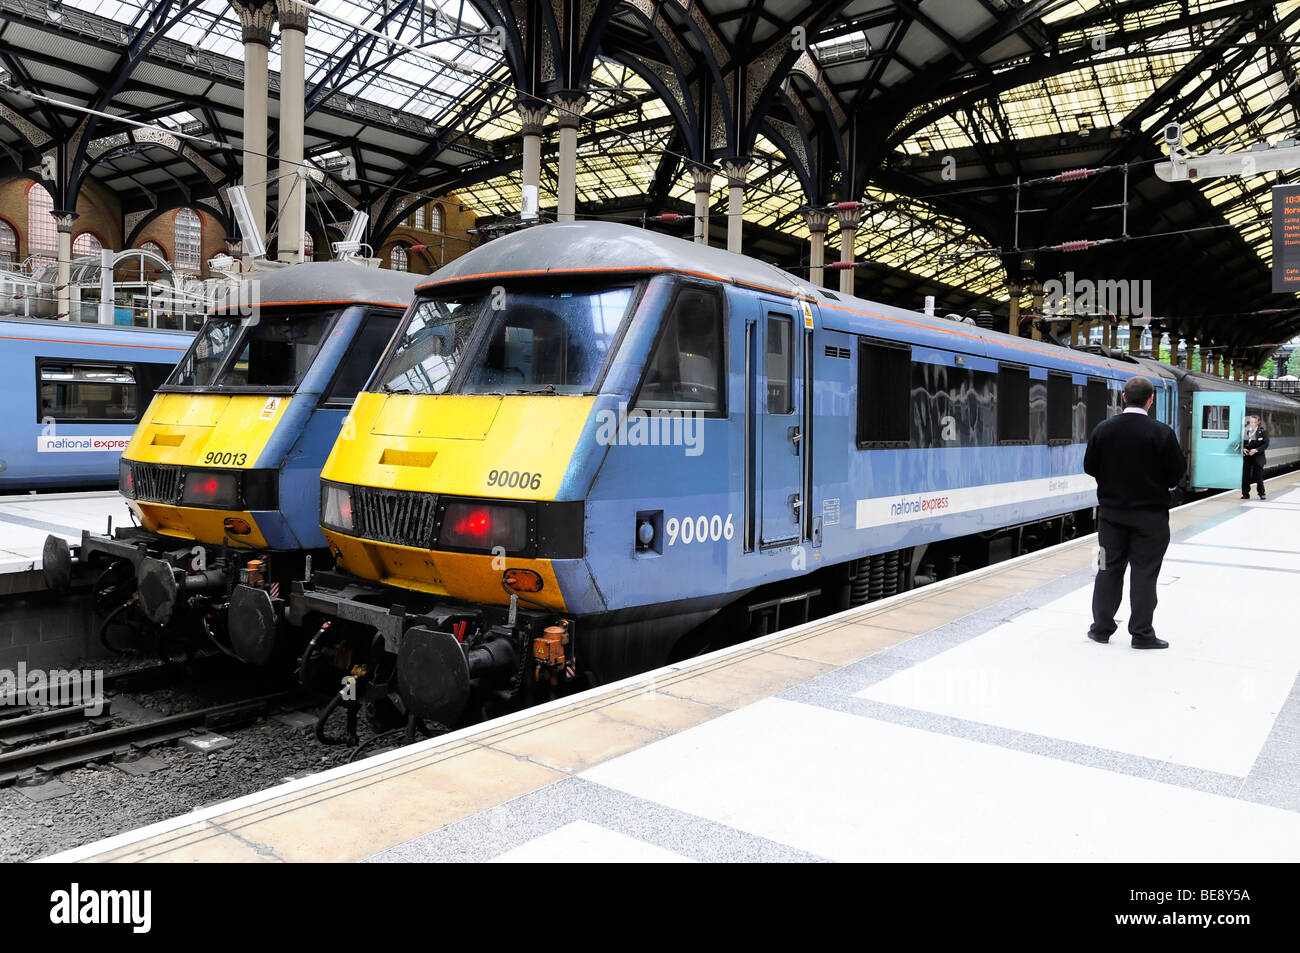 National Express, commuter train, London, England, United Kingdom, Europe Stock Photo